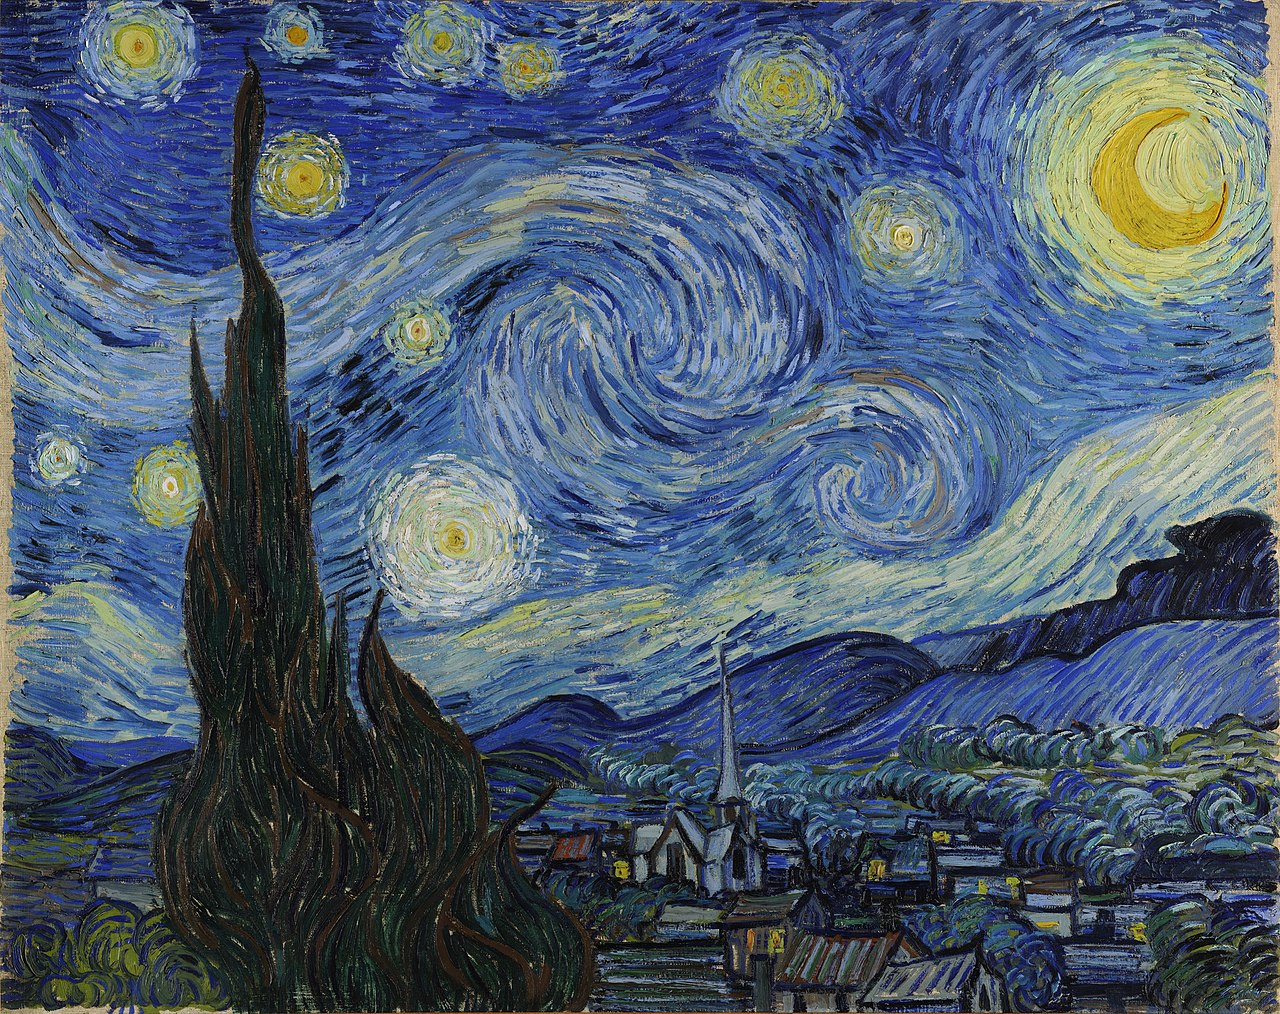 La noche estrellada by Vincent van Gogh - 1889 Museum of Modern Art